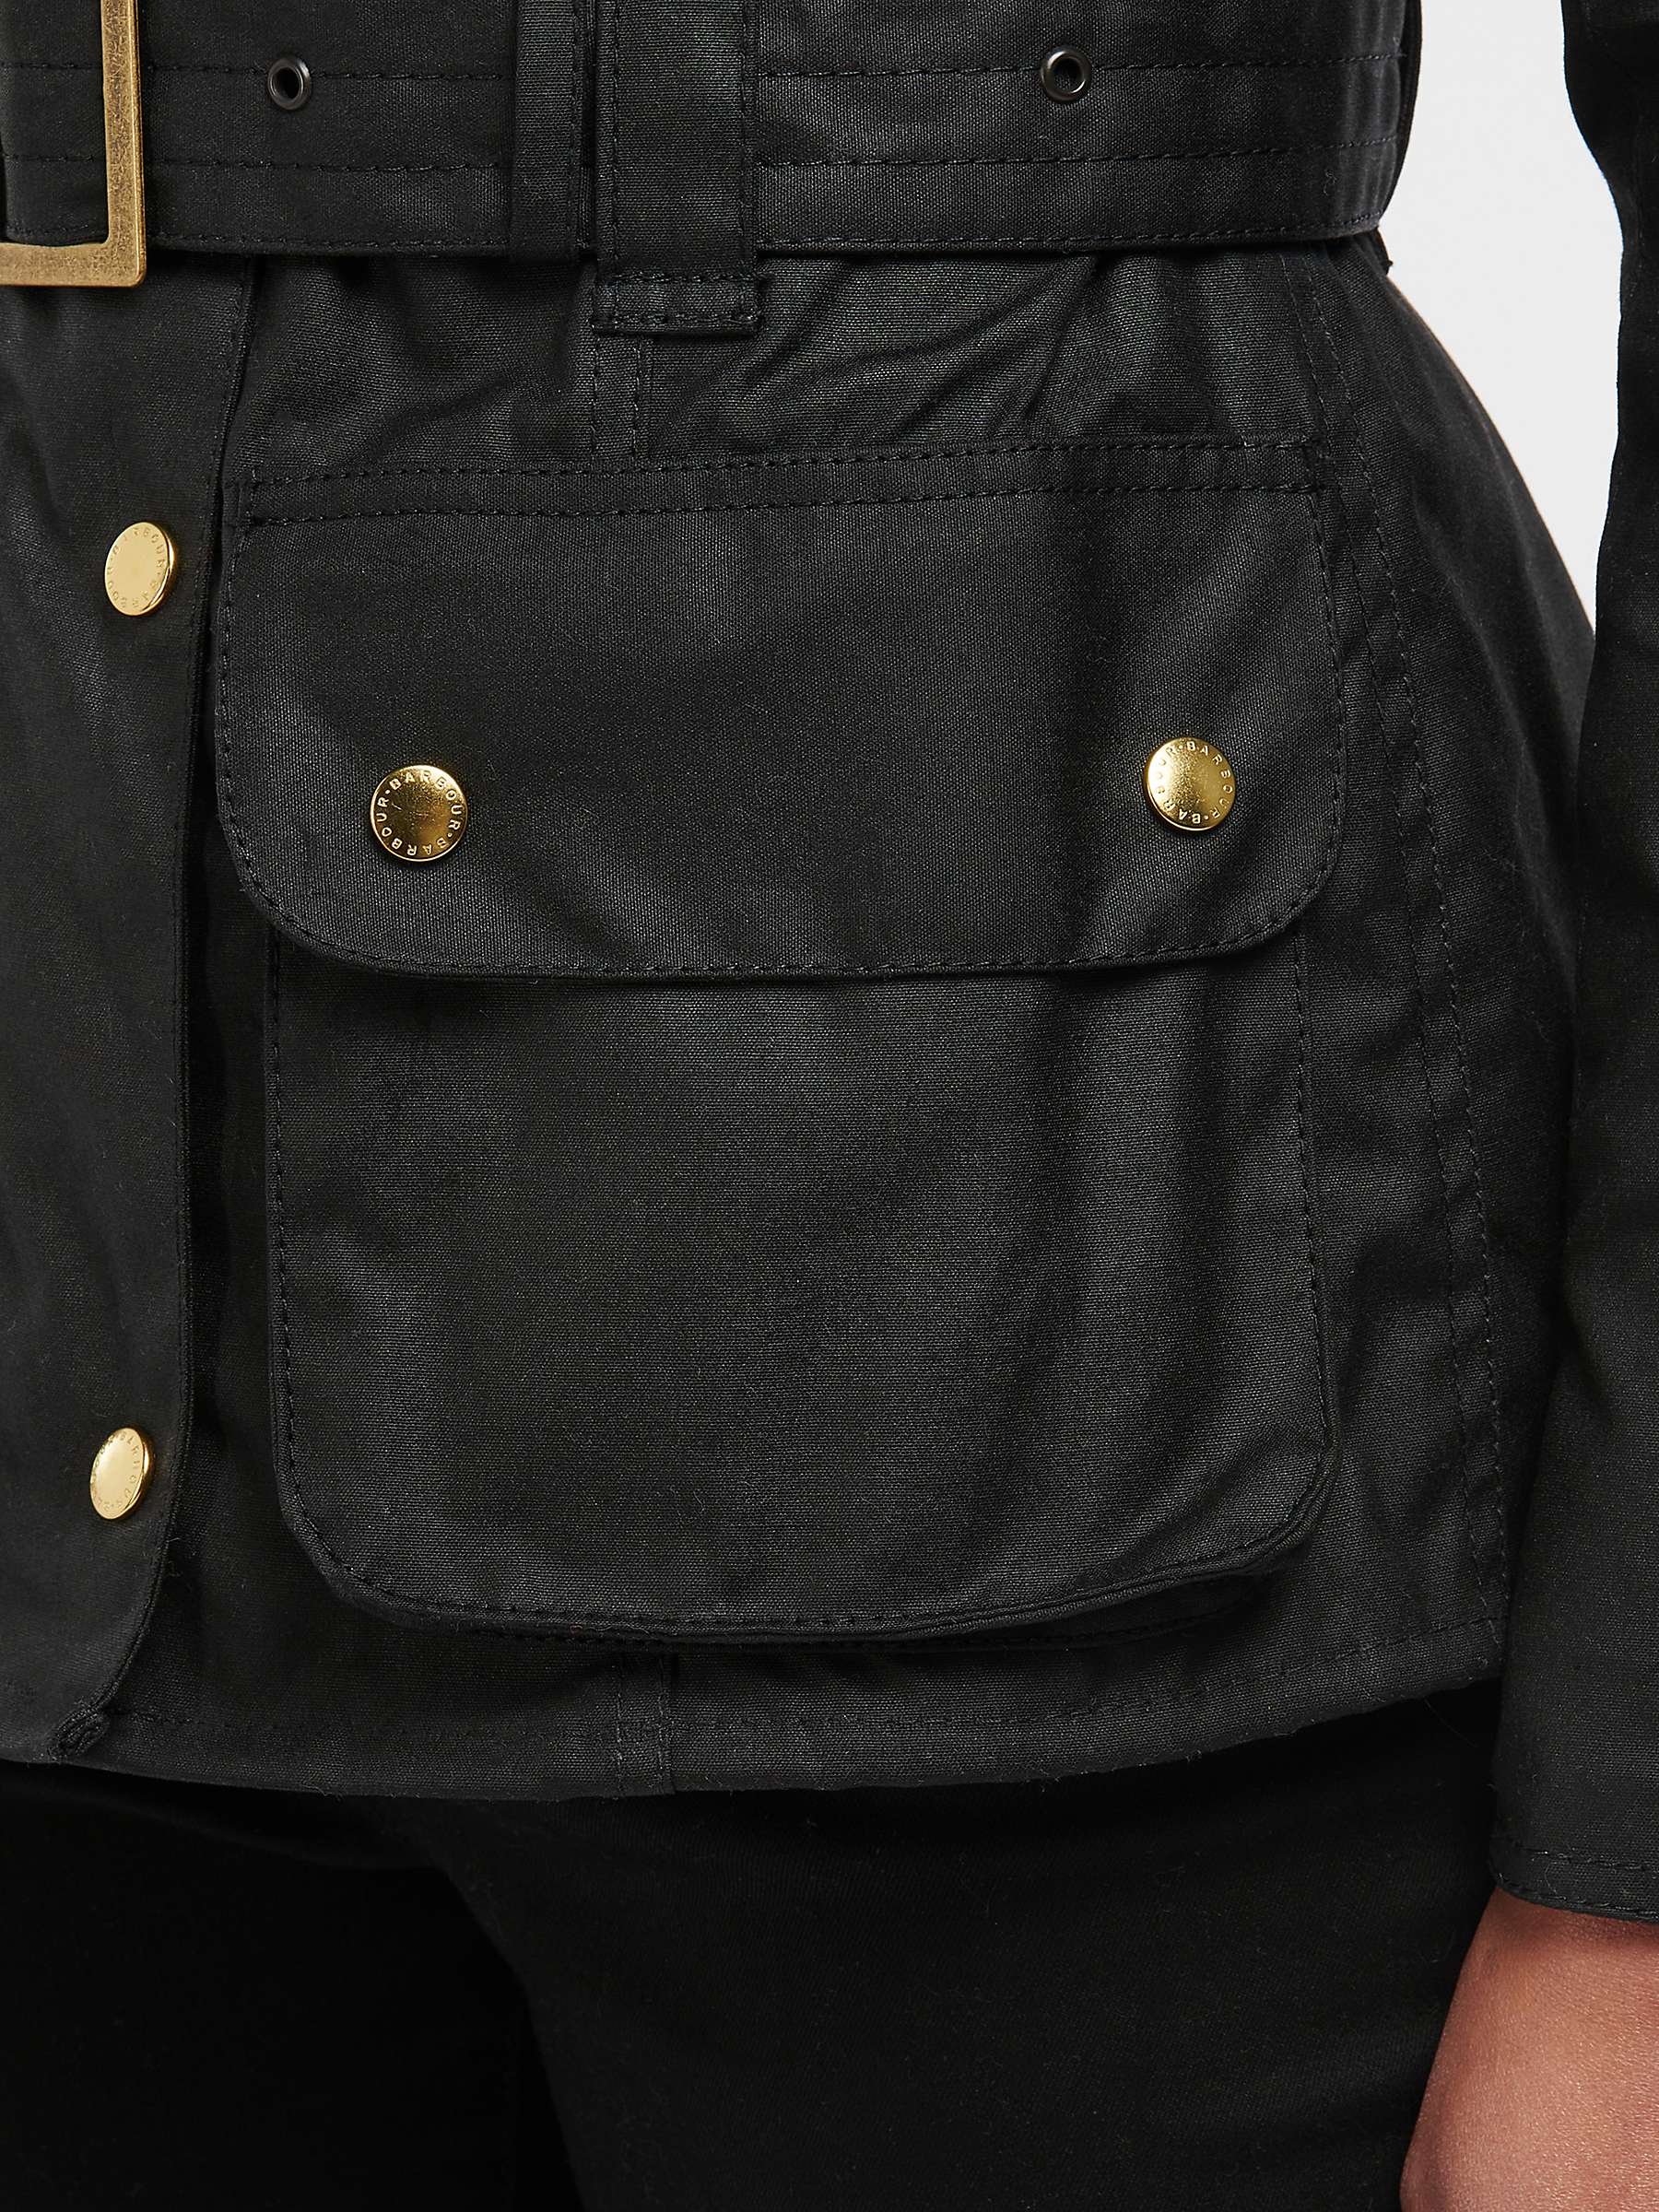 Buy Barbour International Waxed Jacket, Black Online at johnlewis.com